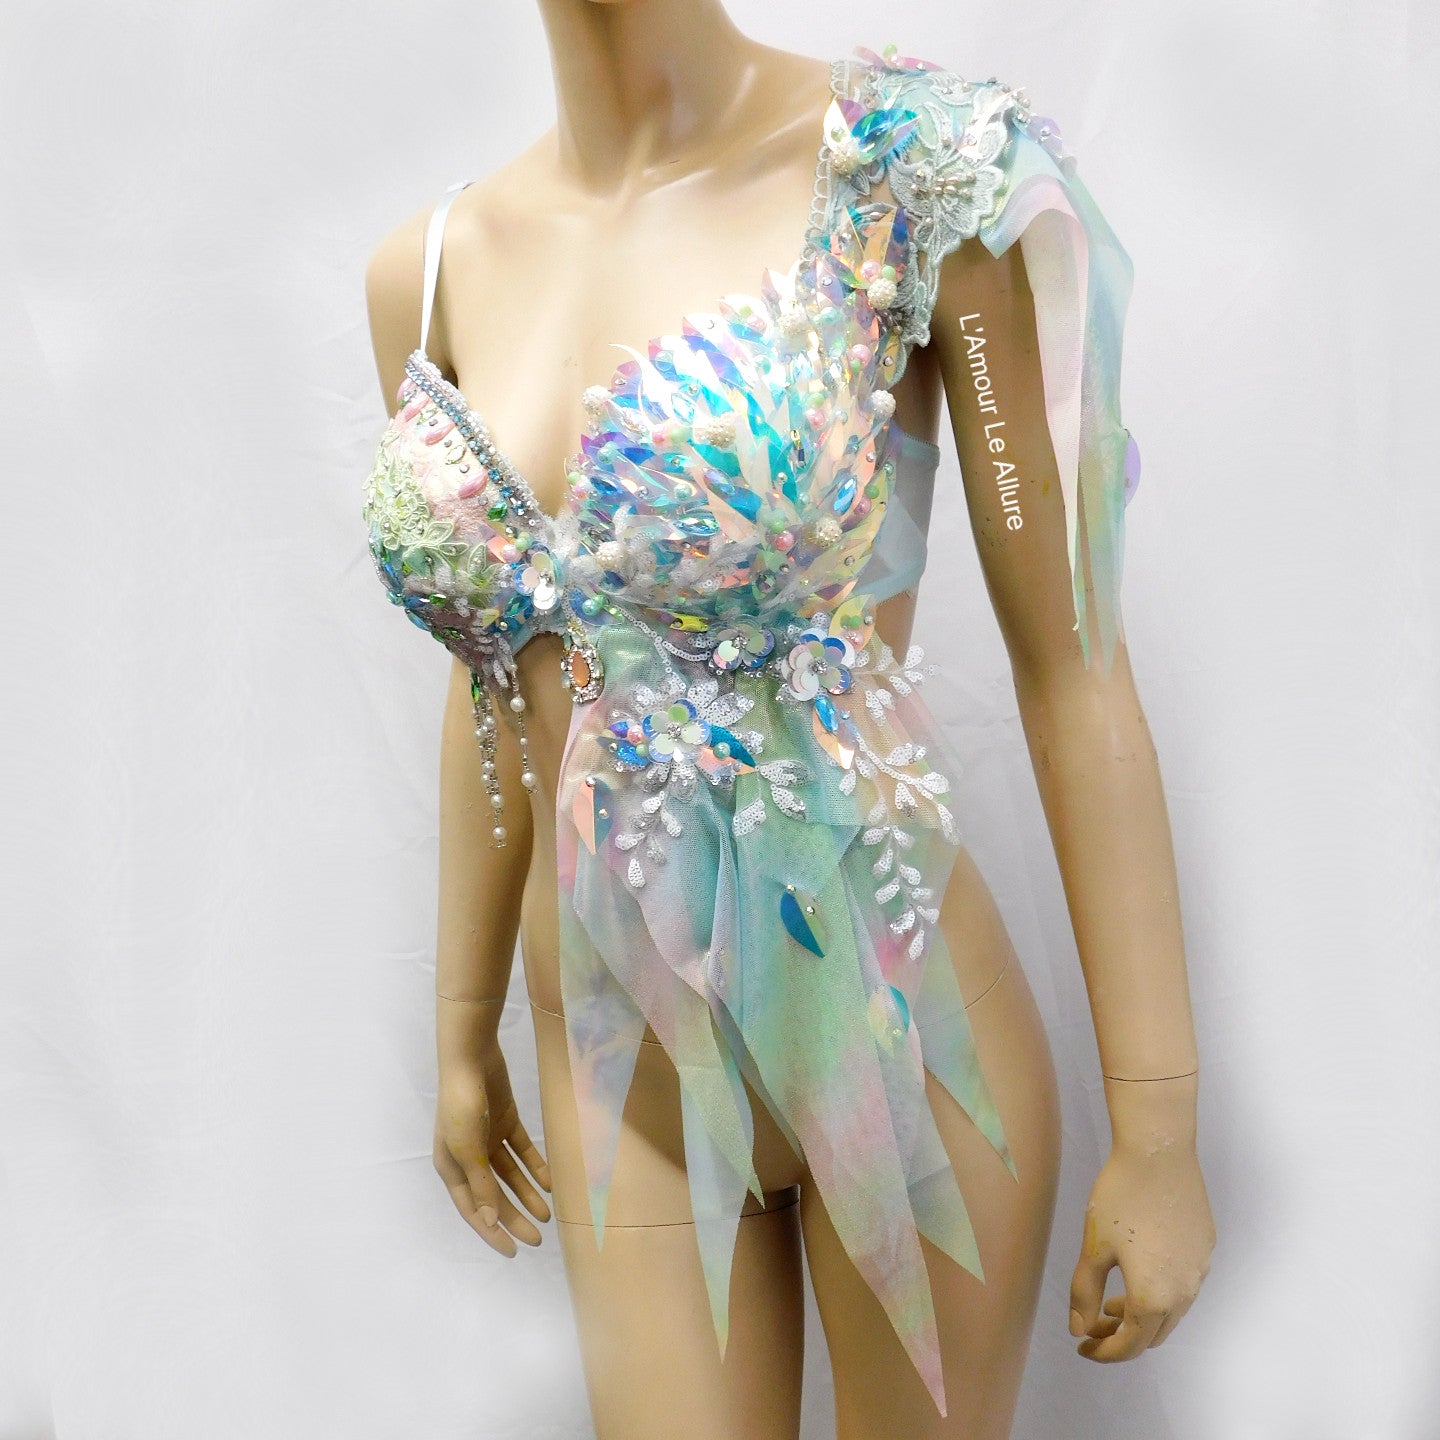 Holographic Pastel Rainbow Flower Fairy Bra Top Costume Dance Rave